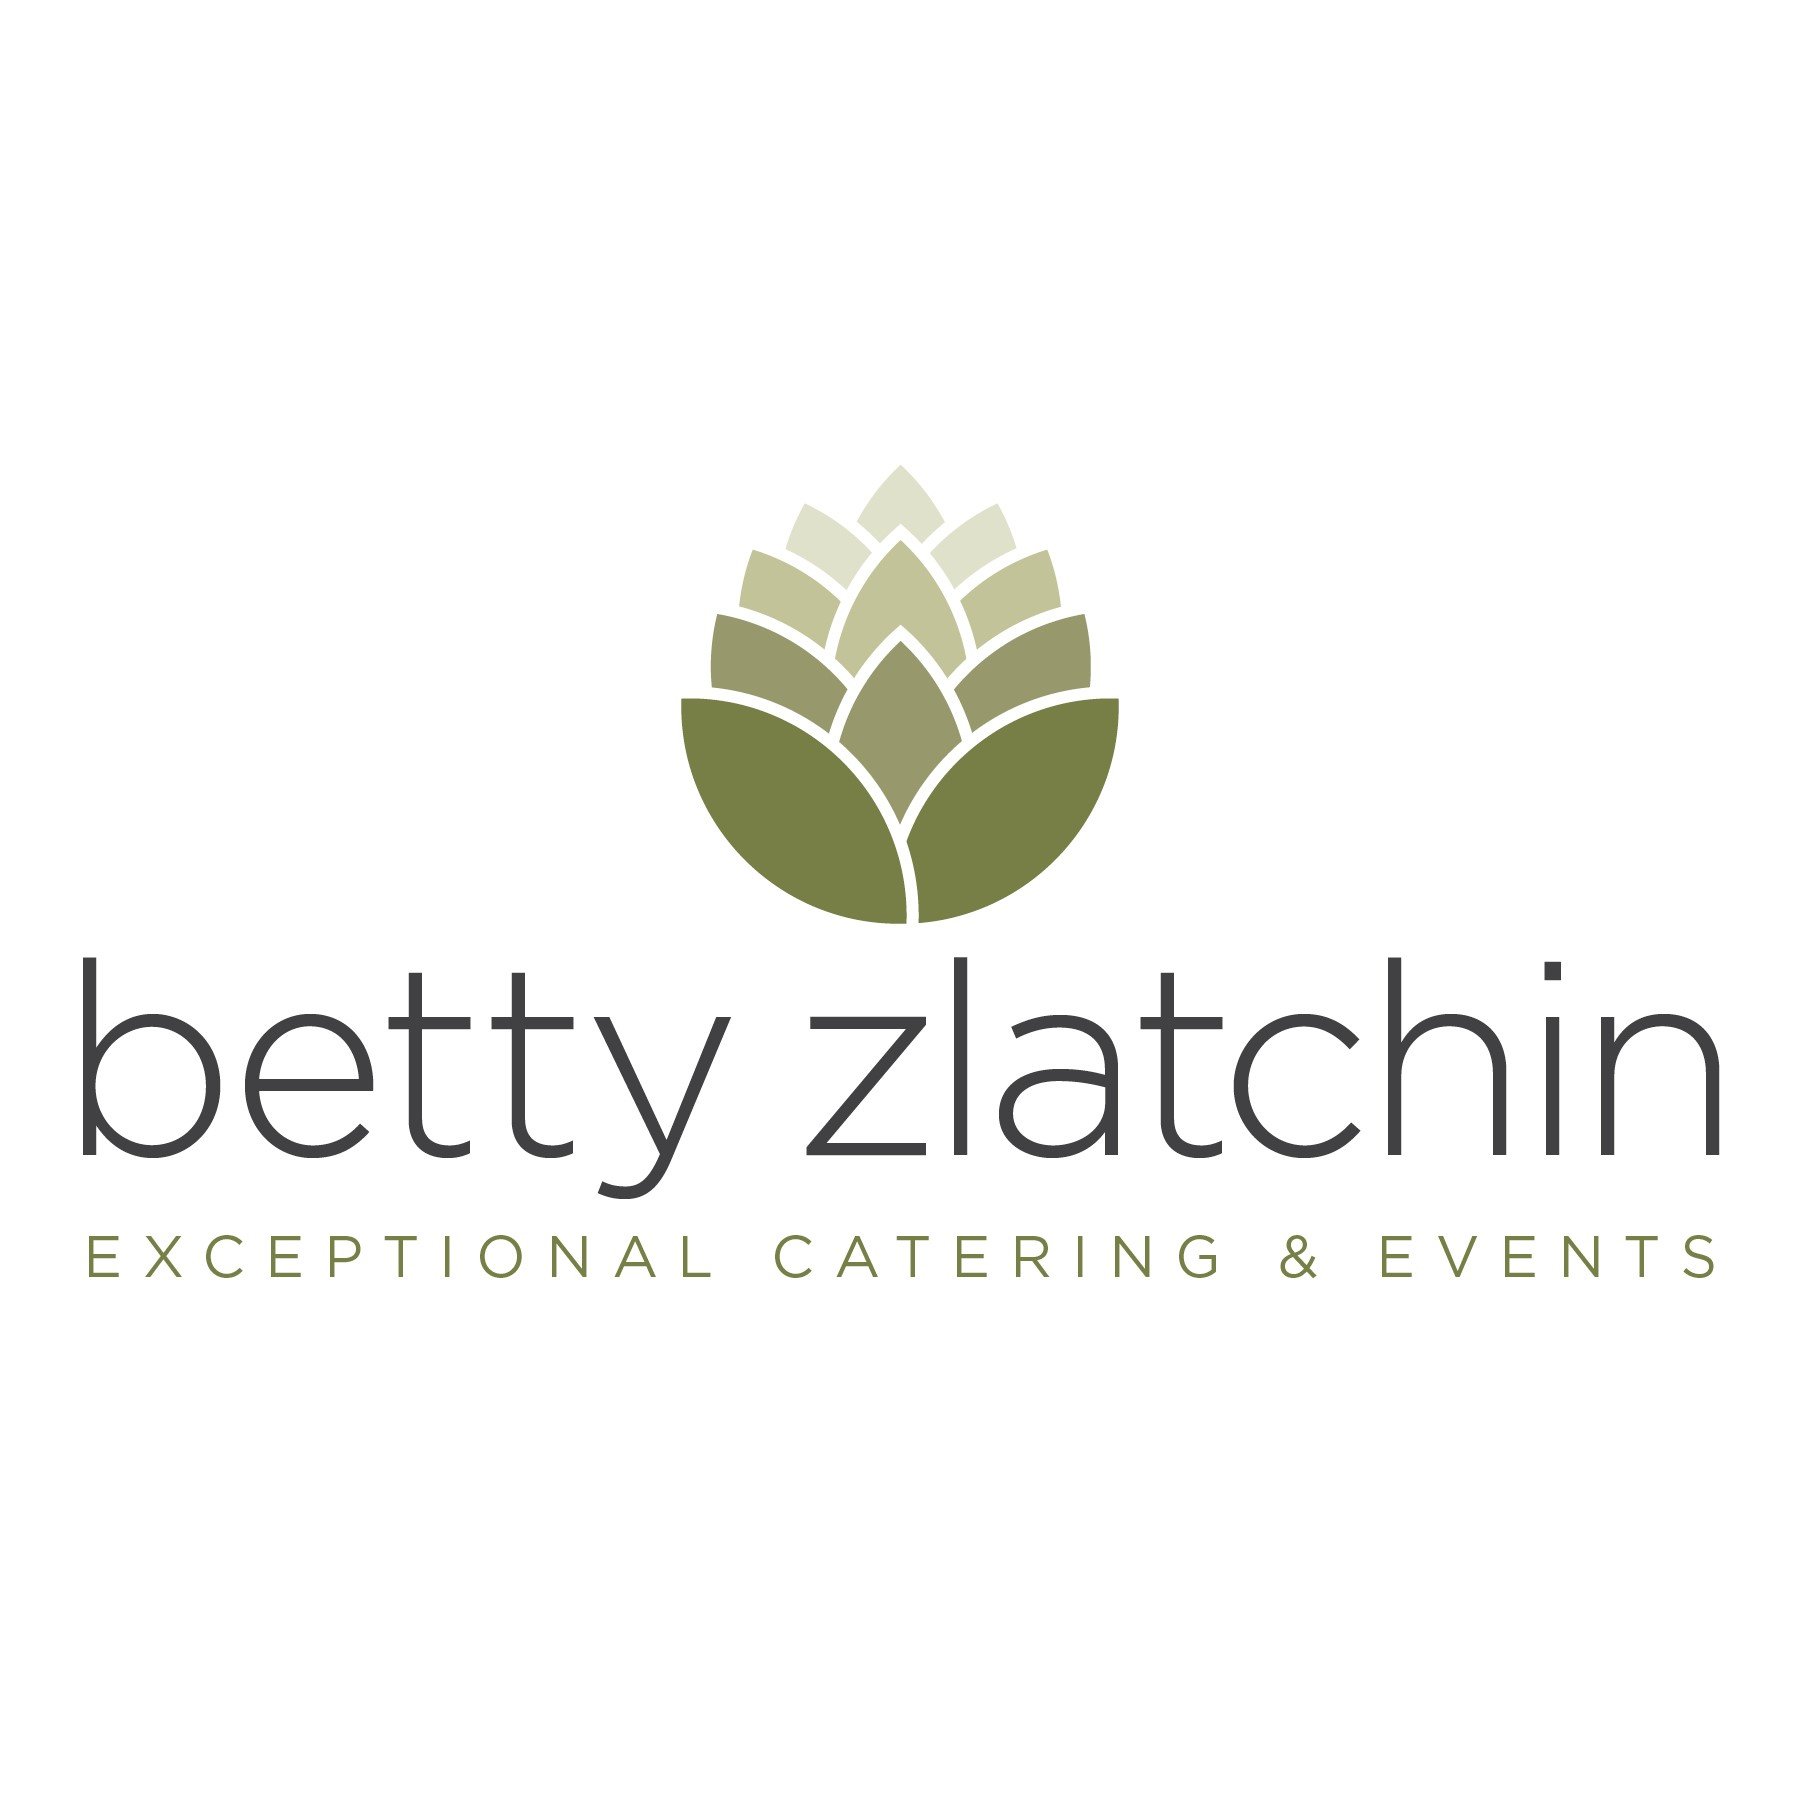 betty zlatchin artichoke logo_vertical.jpg